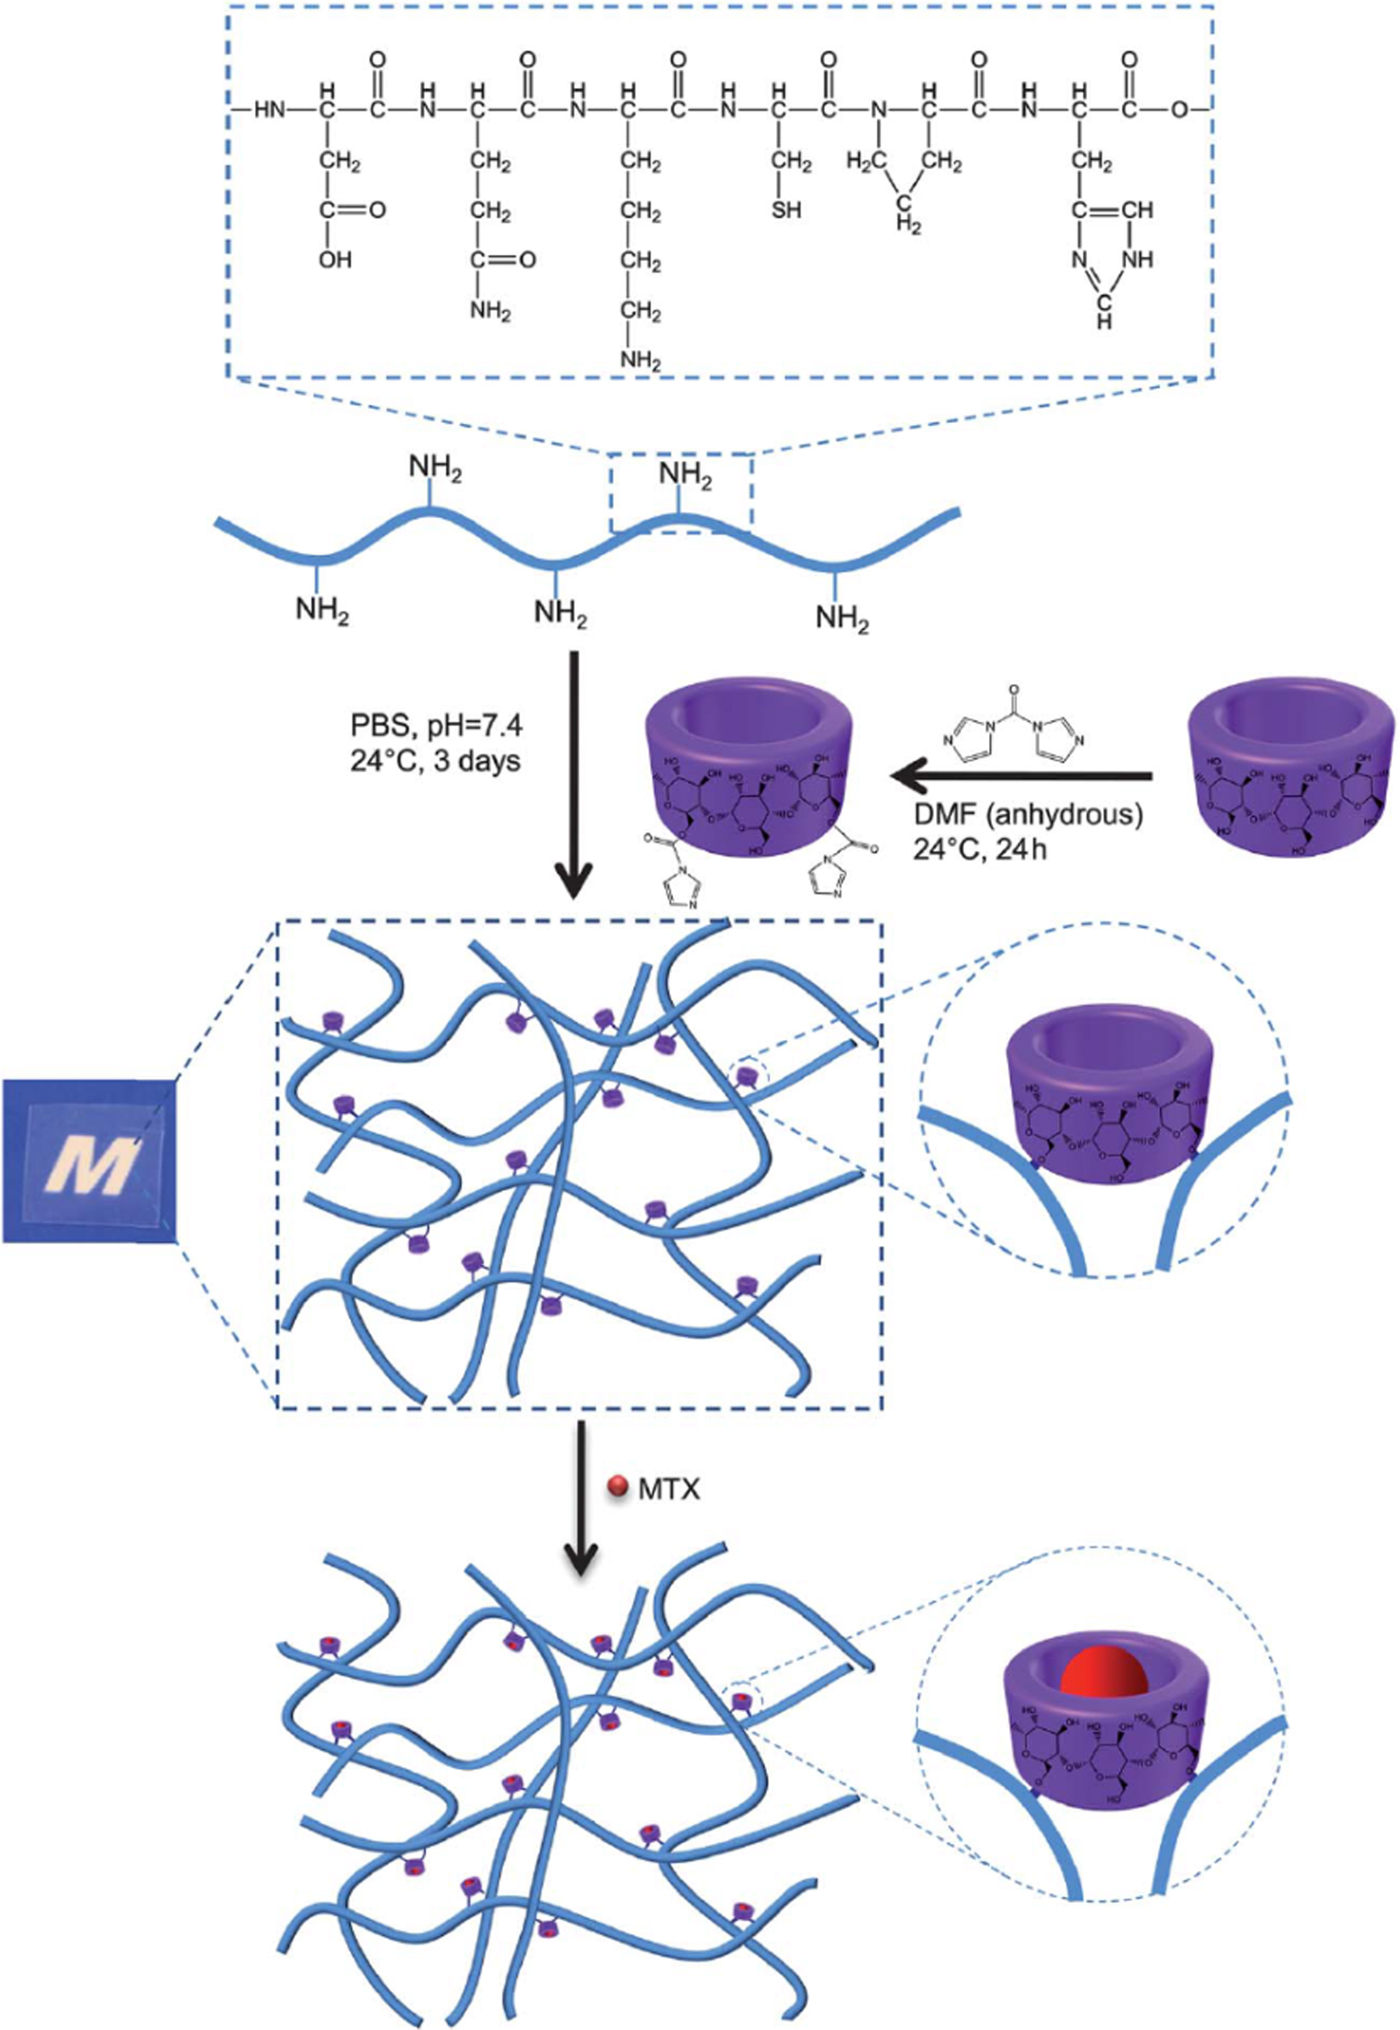 Gelatin-based hydrogels for biomedical applications | MRS 